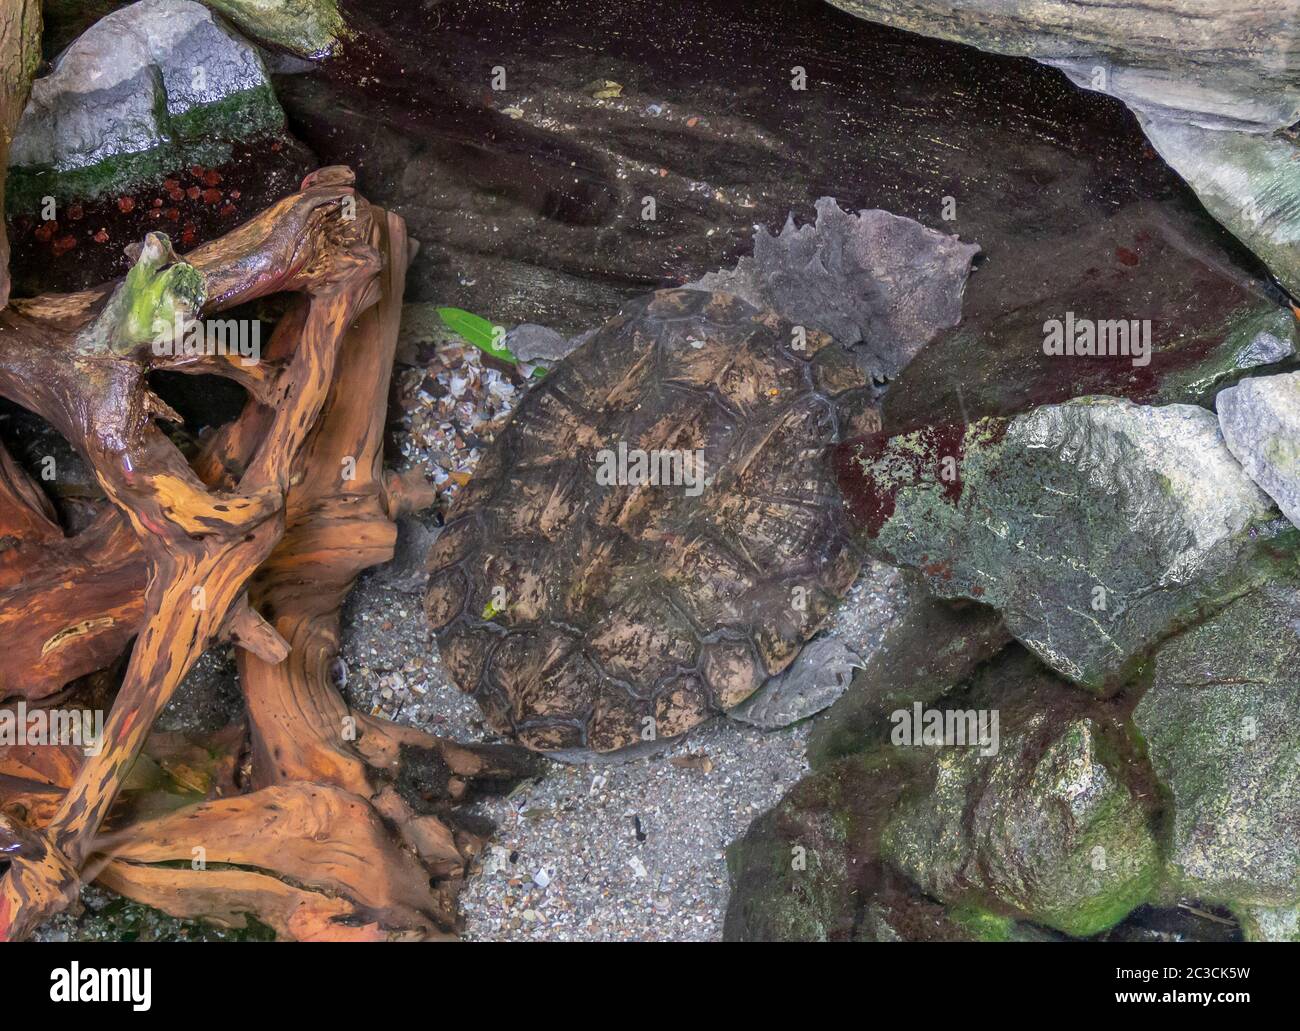 high angle shot showing a Mata mata turtle in riparian ambiance Stock Photo